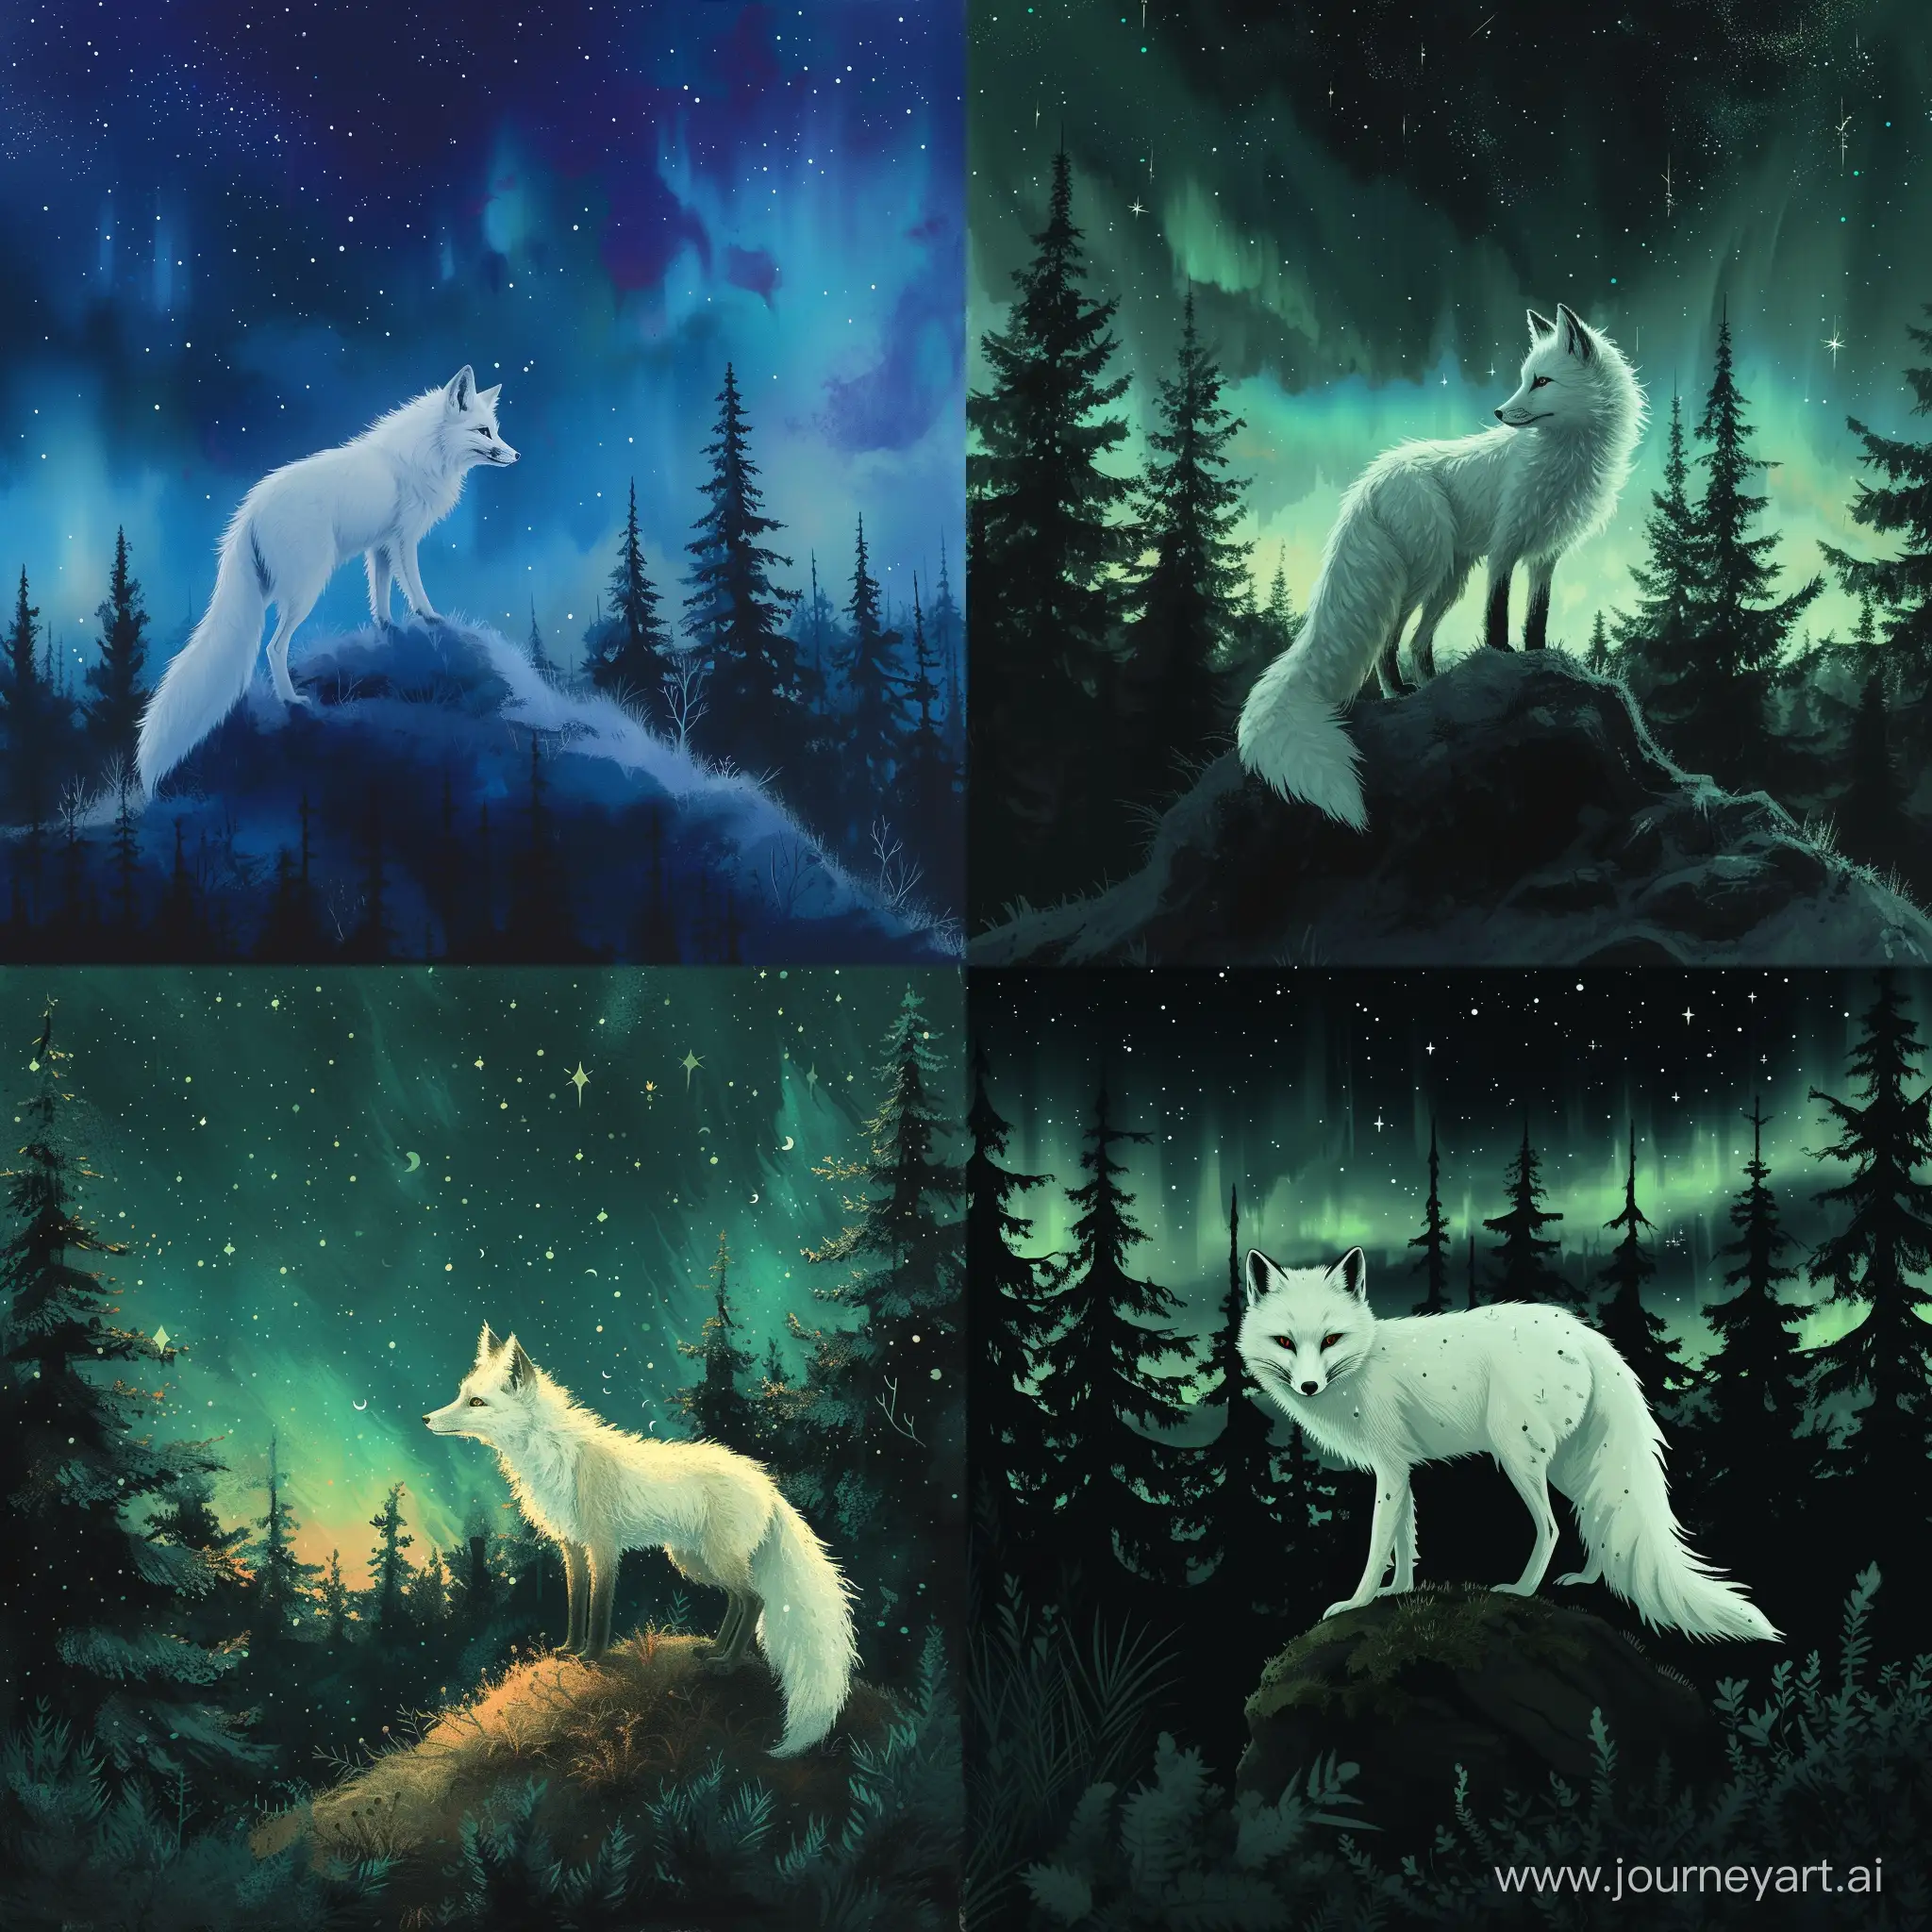 Majestic-Arctic-Fox-Gazing-under-Northern-Lights-in-MiyazakiInspired-Night-Forest